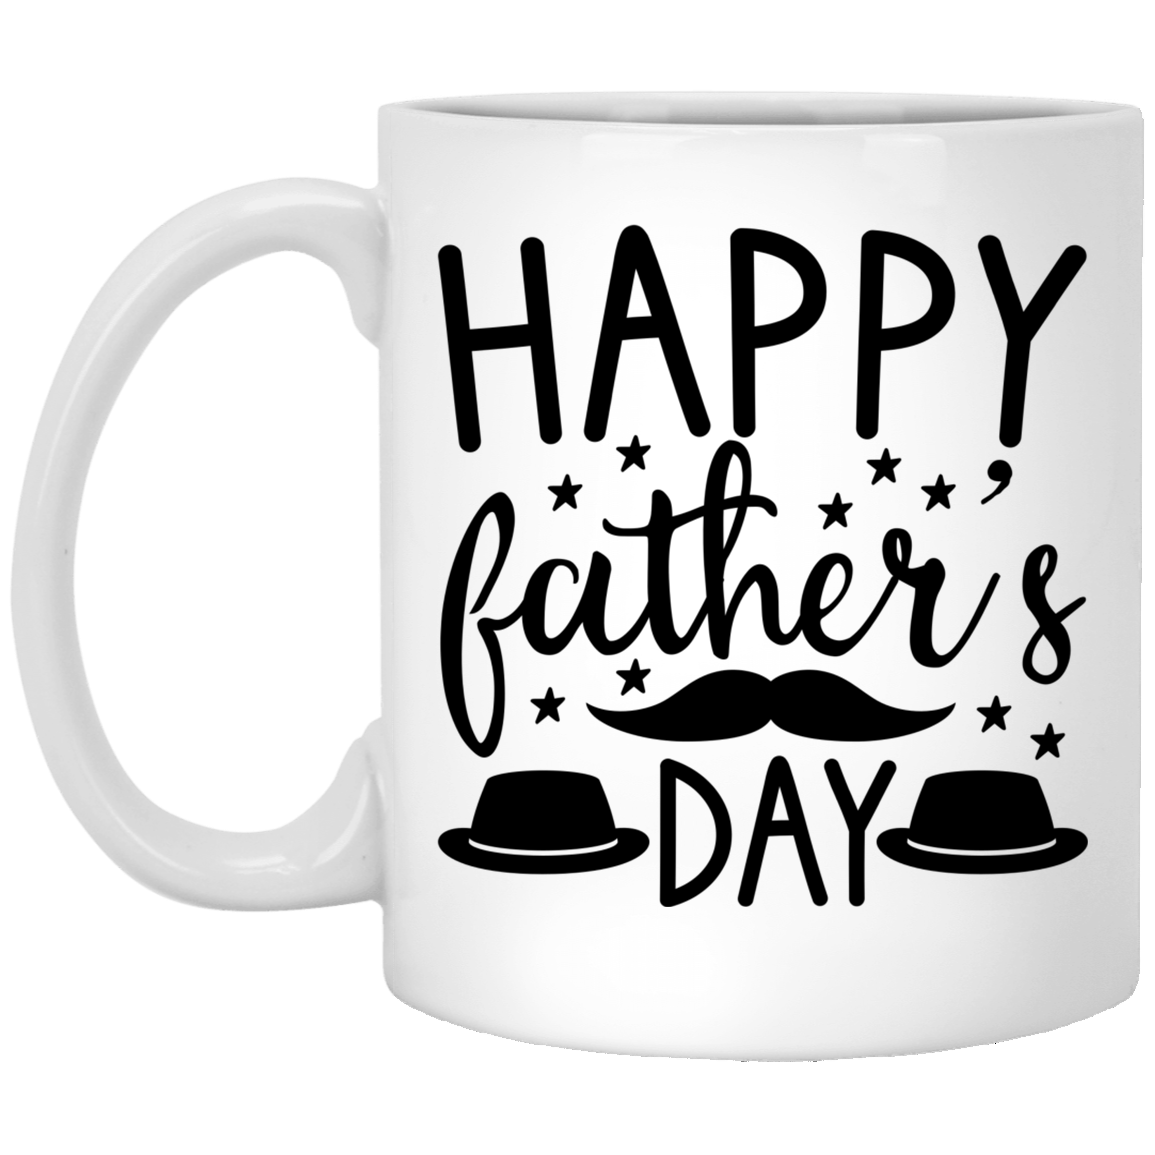 Happy Fathers Day 11 oz. White Mug